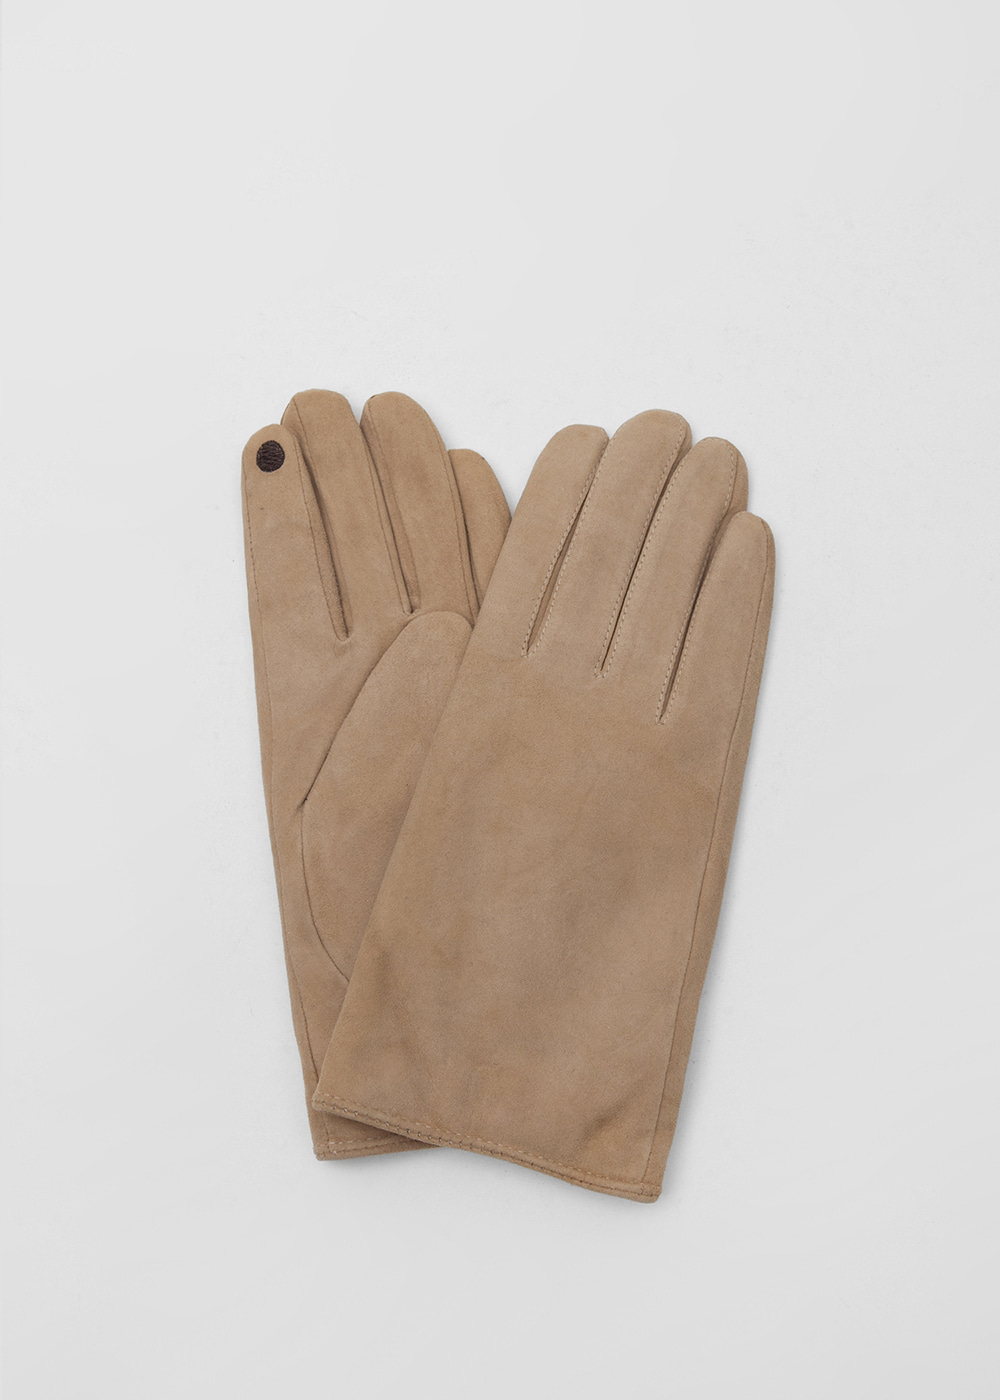 21FW Winter suede gloves [촬영샘플]